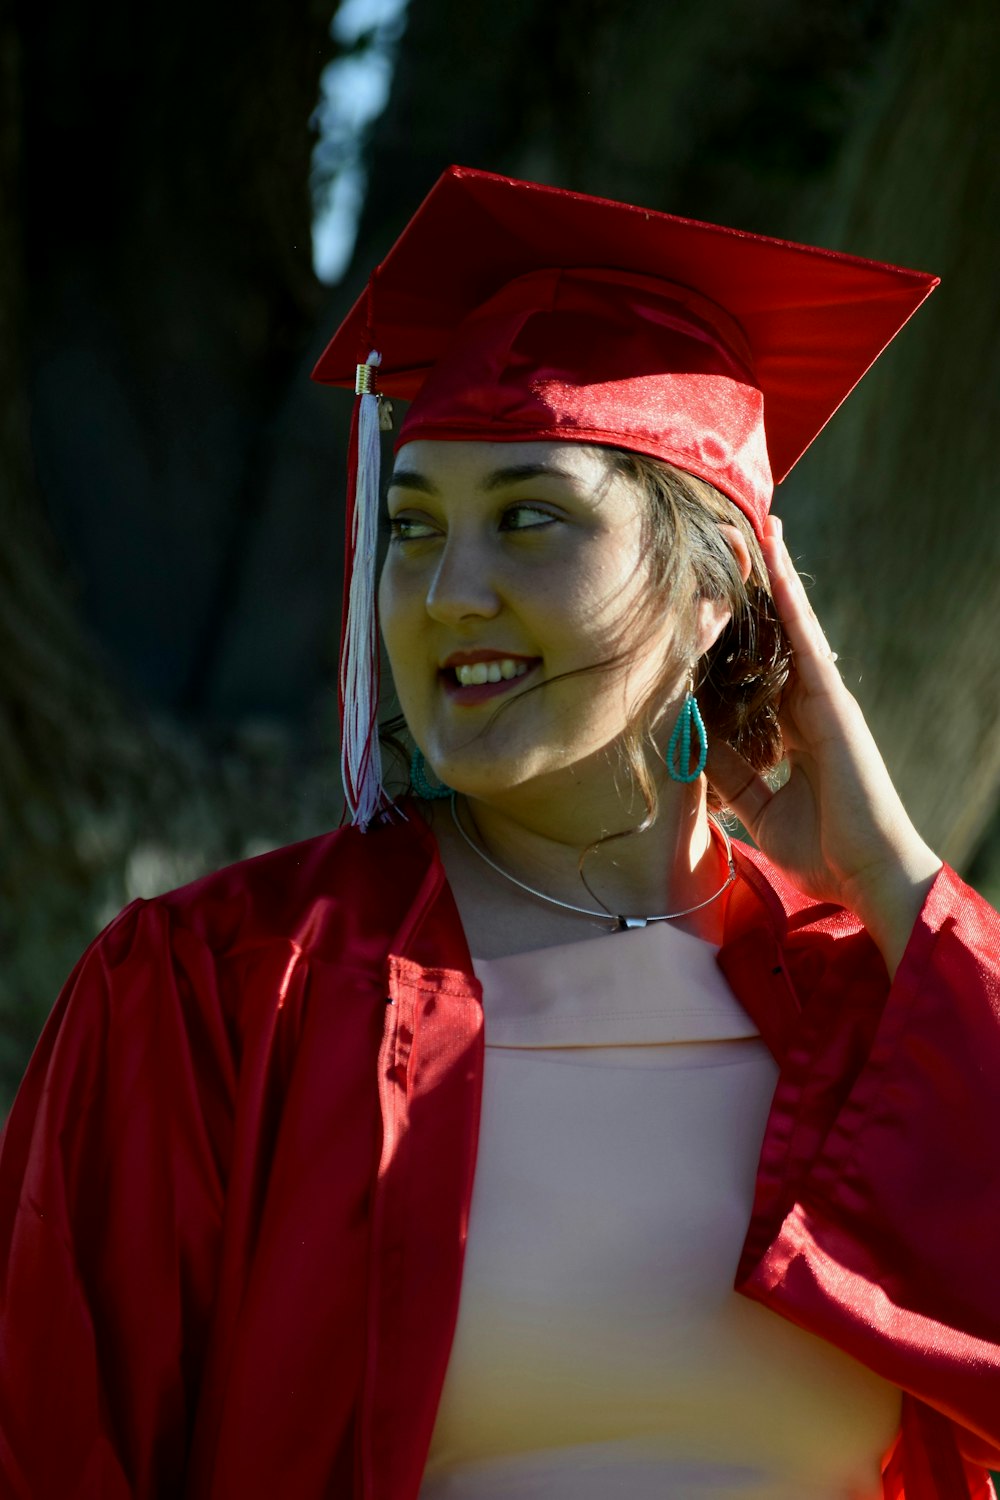 woman wearing red academic dress smiling